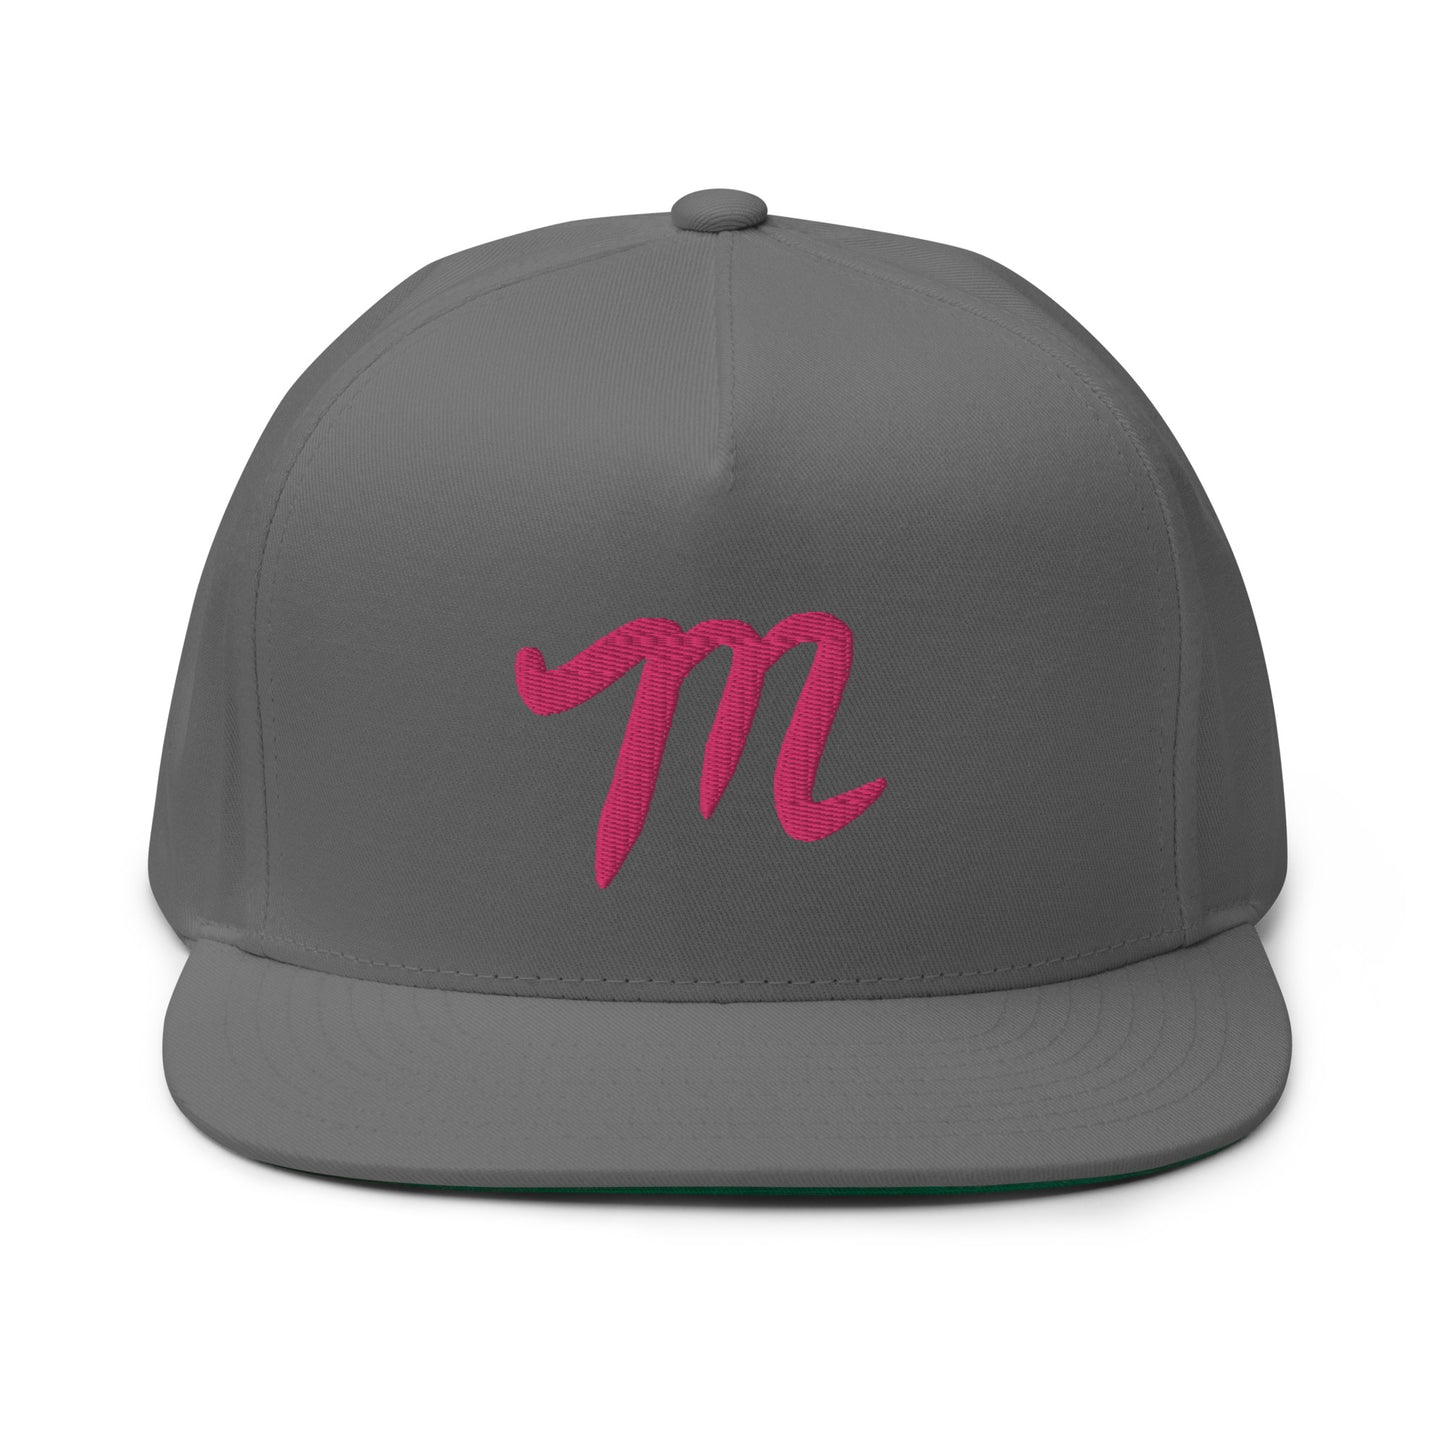 Manolo Grey Hat Pink M Flat Bill Cap